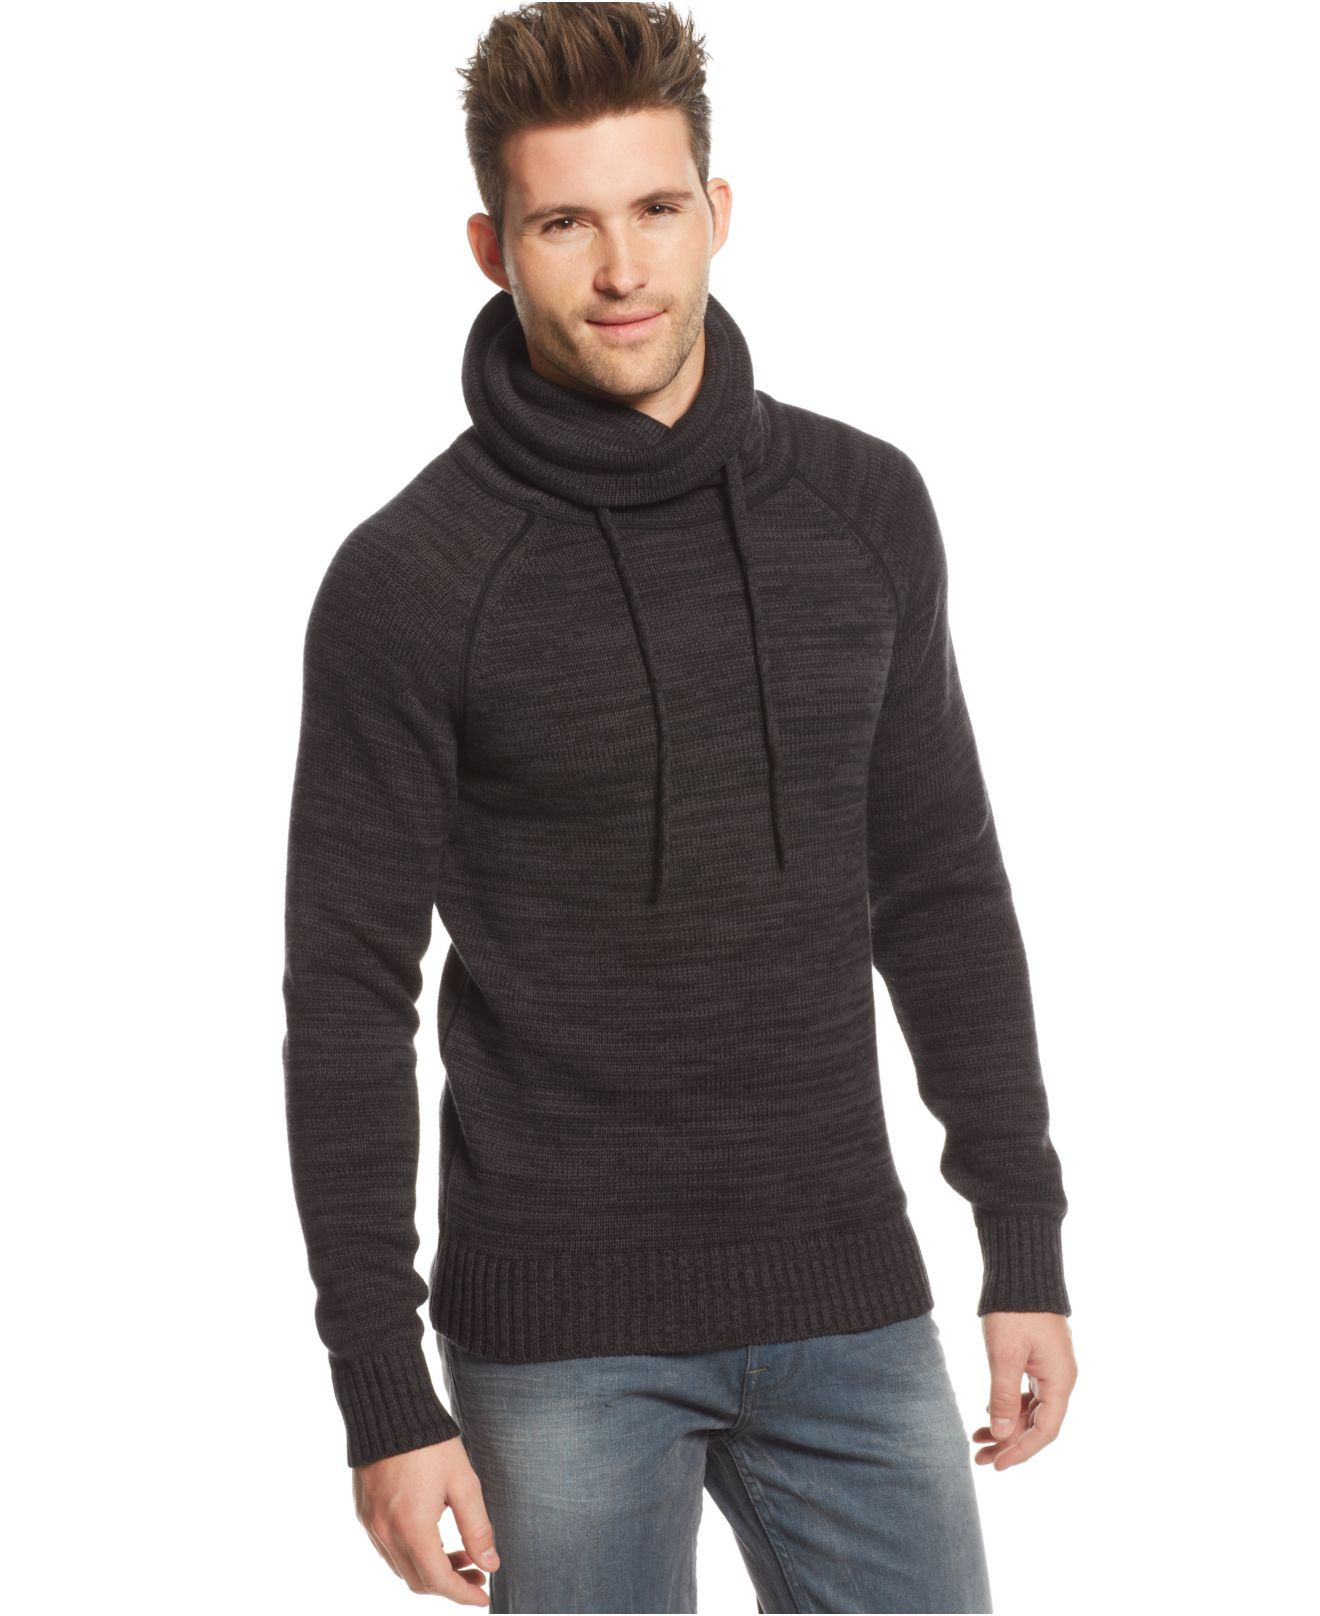 Lyst - Guess Dawson Dip-Dye Funnel-Neck Sweater in Black for Men